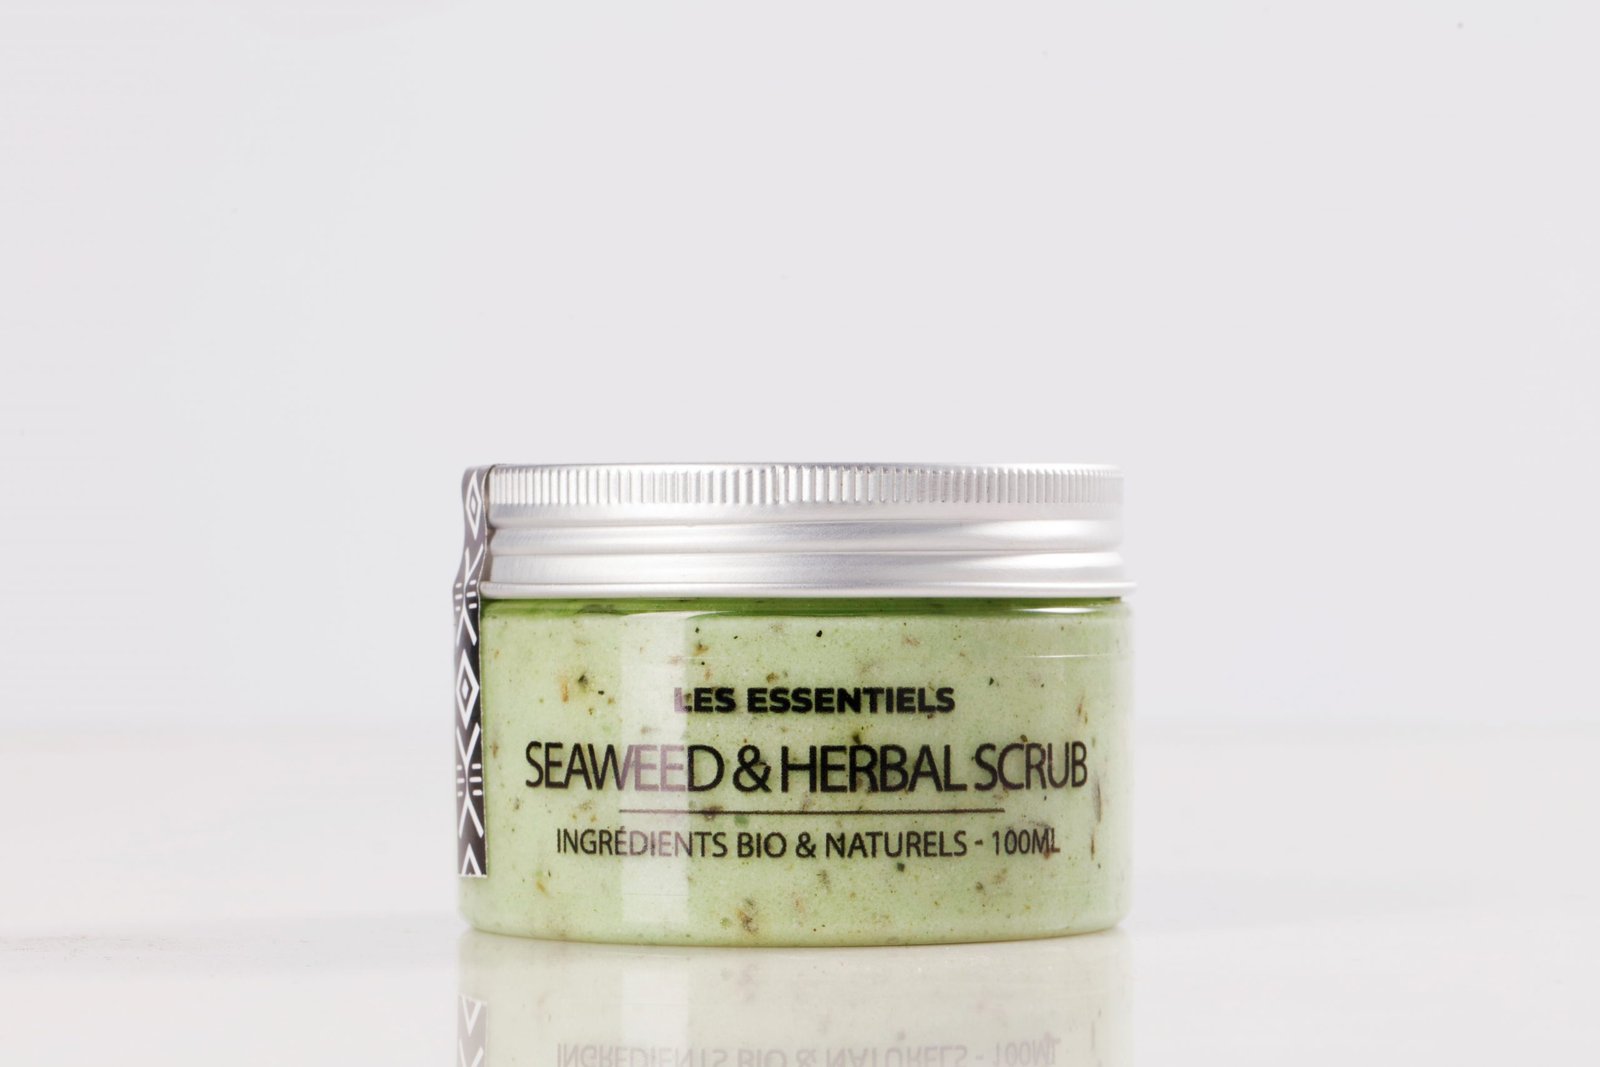 Seaweed & Herbal scrub